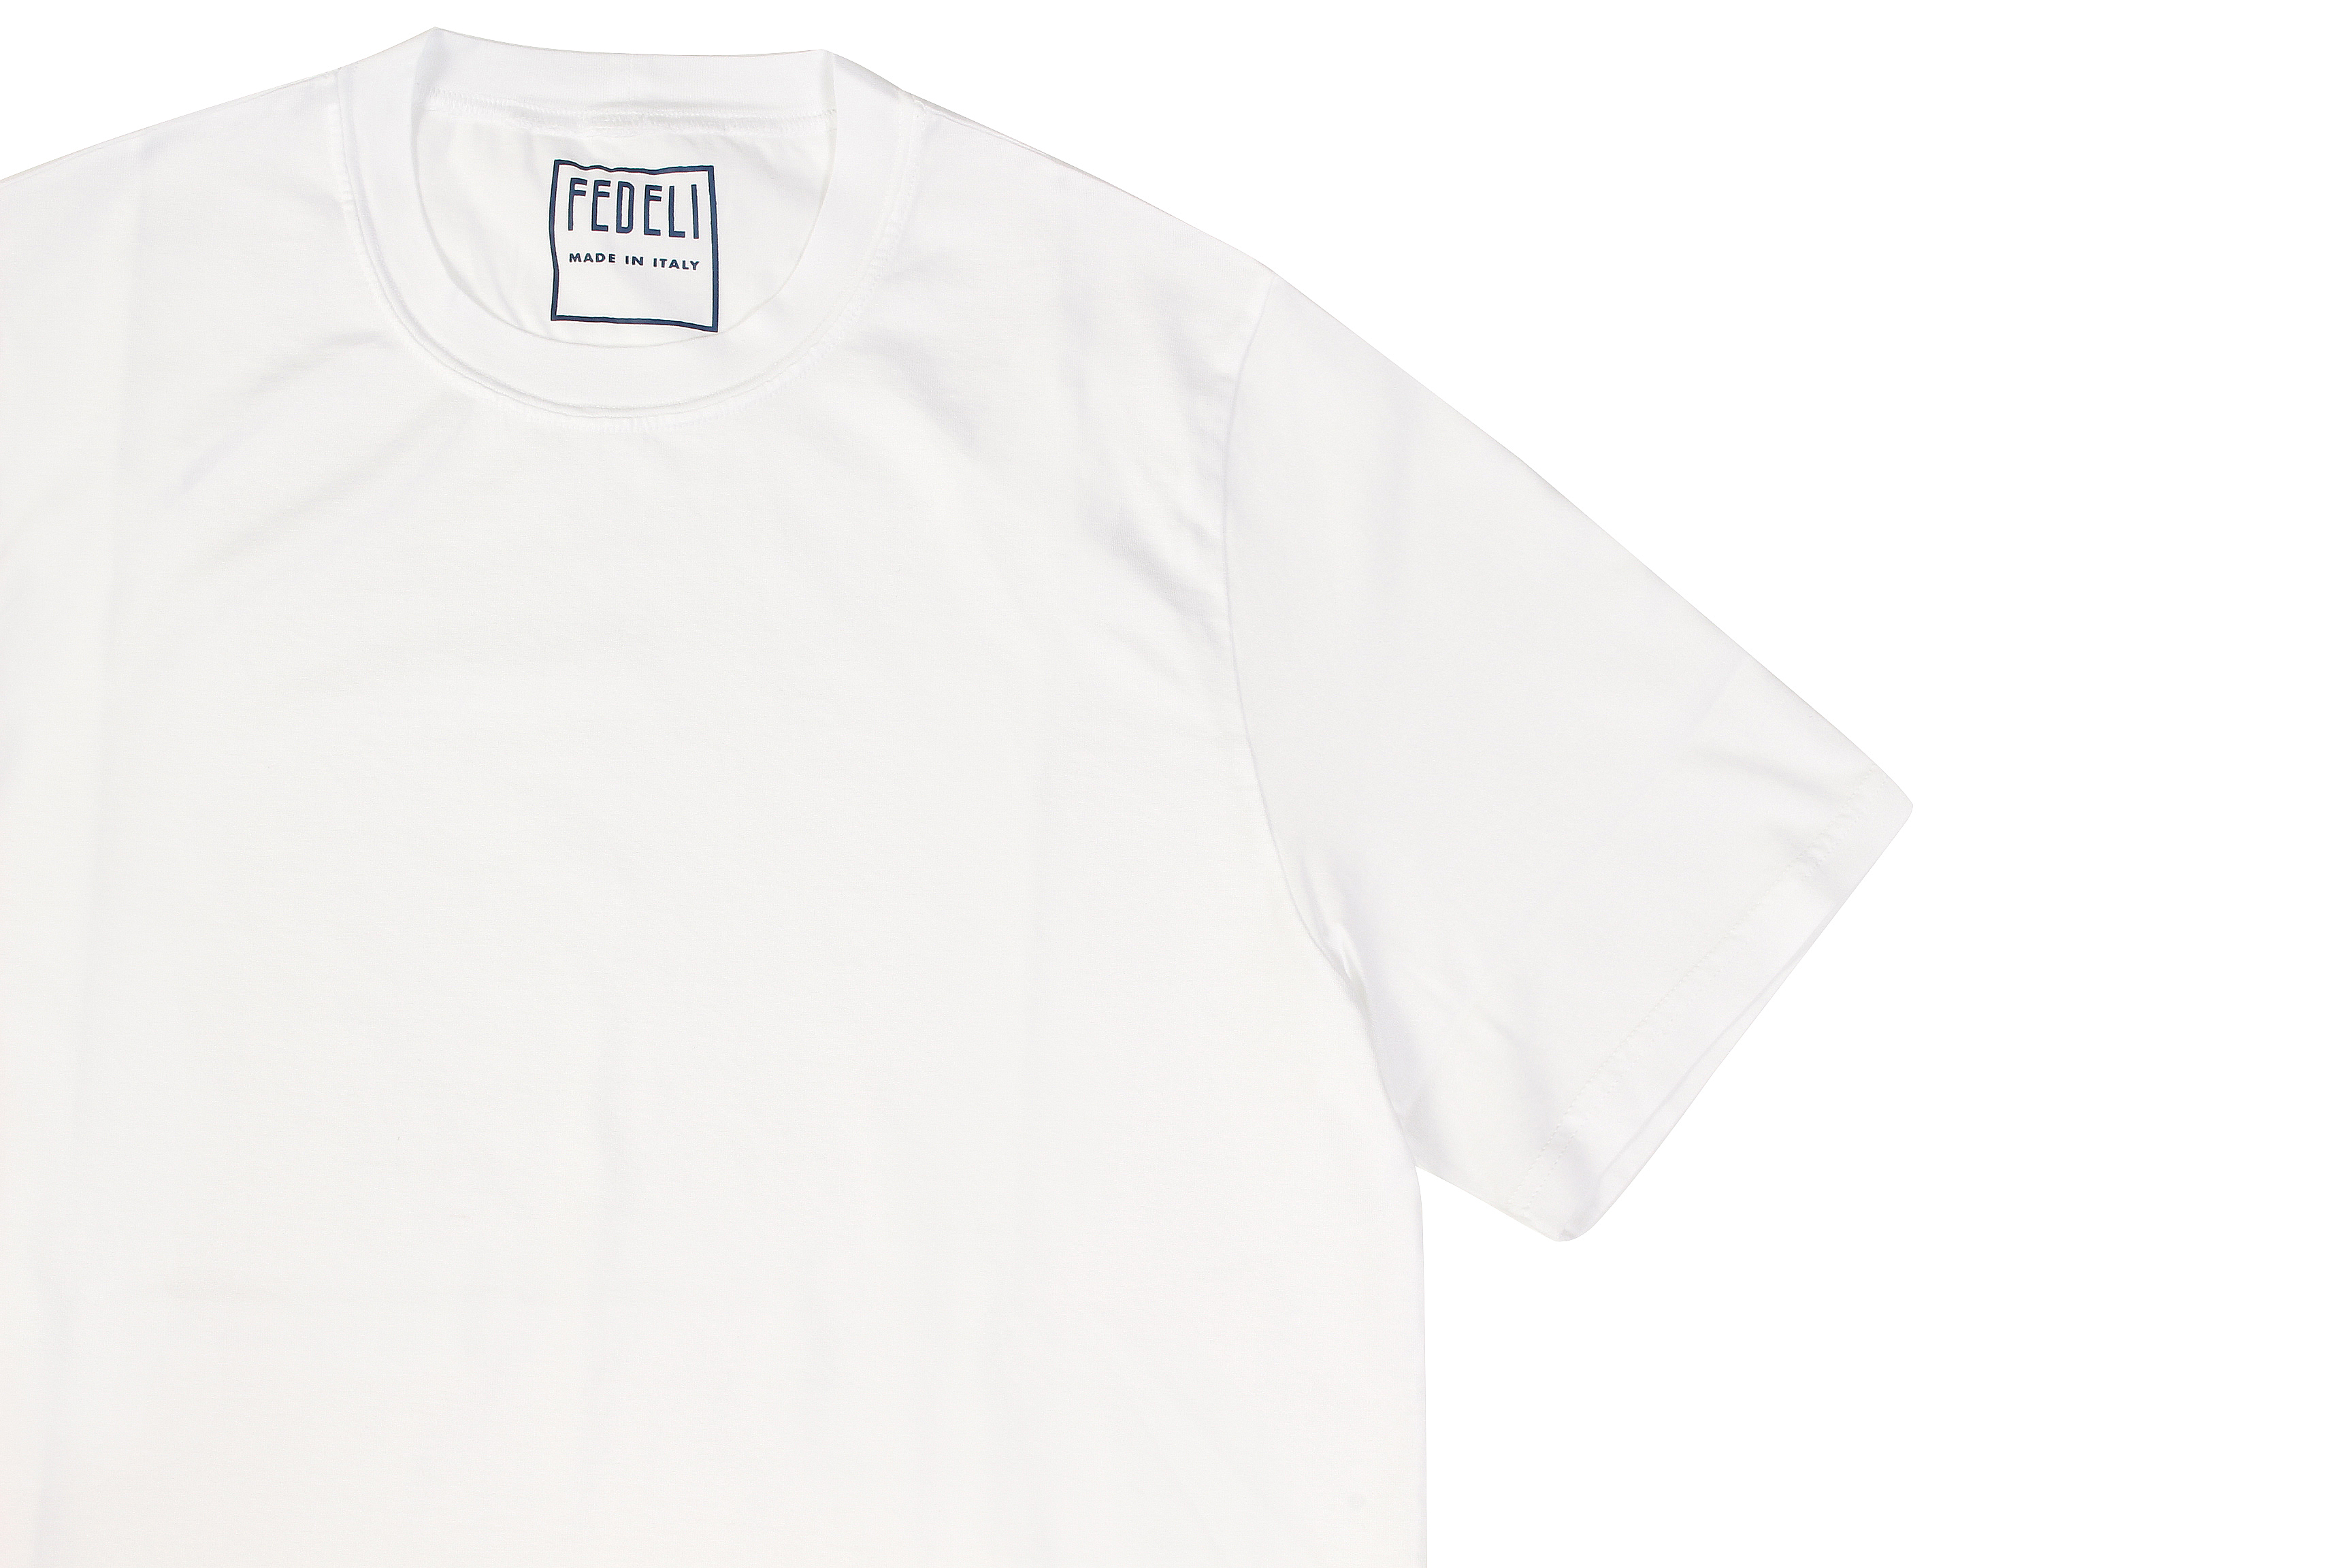 FEDELI(フェデーリ) Crew Neck T-shirt (クルーネック Tシャツ) ギザコットン Tシャツ WHITE (ホワイト・41) made in italy (イタリア製) 2020 春夏 【ご予約開始】愛知 名古屋 altoediritto アルトエデリット TEE